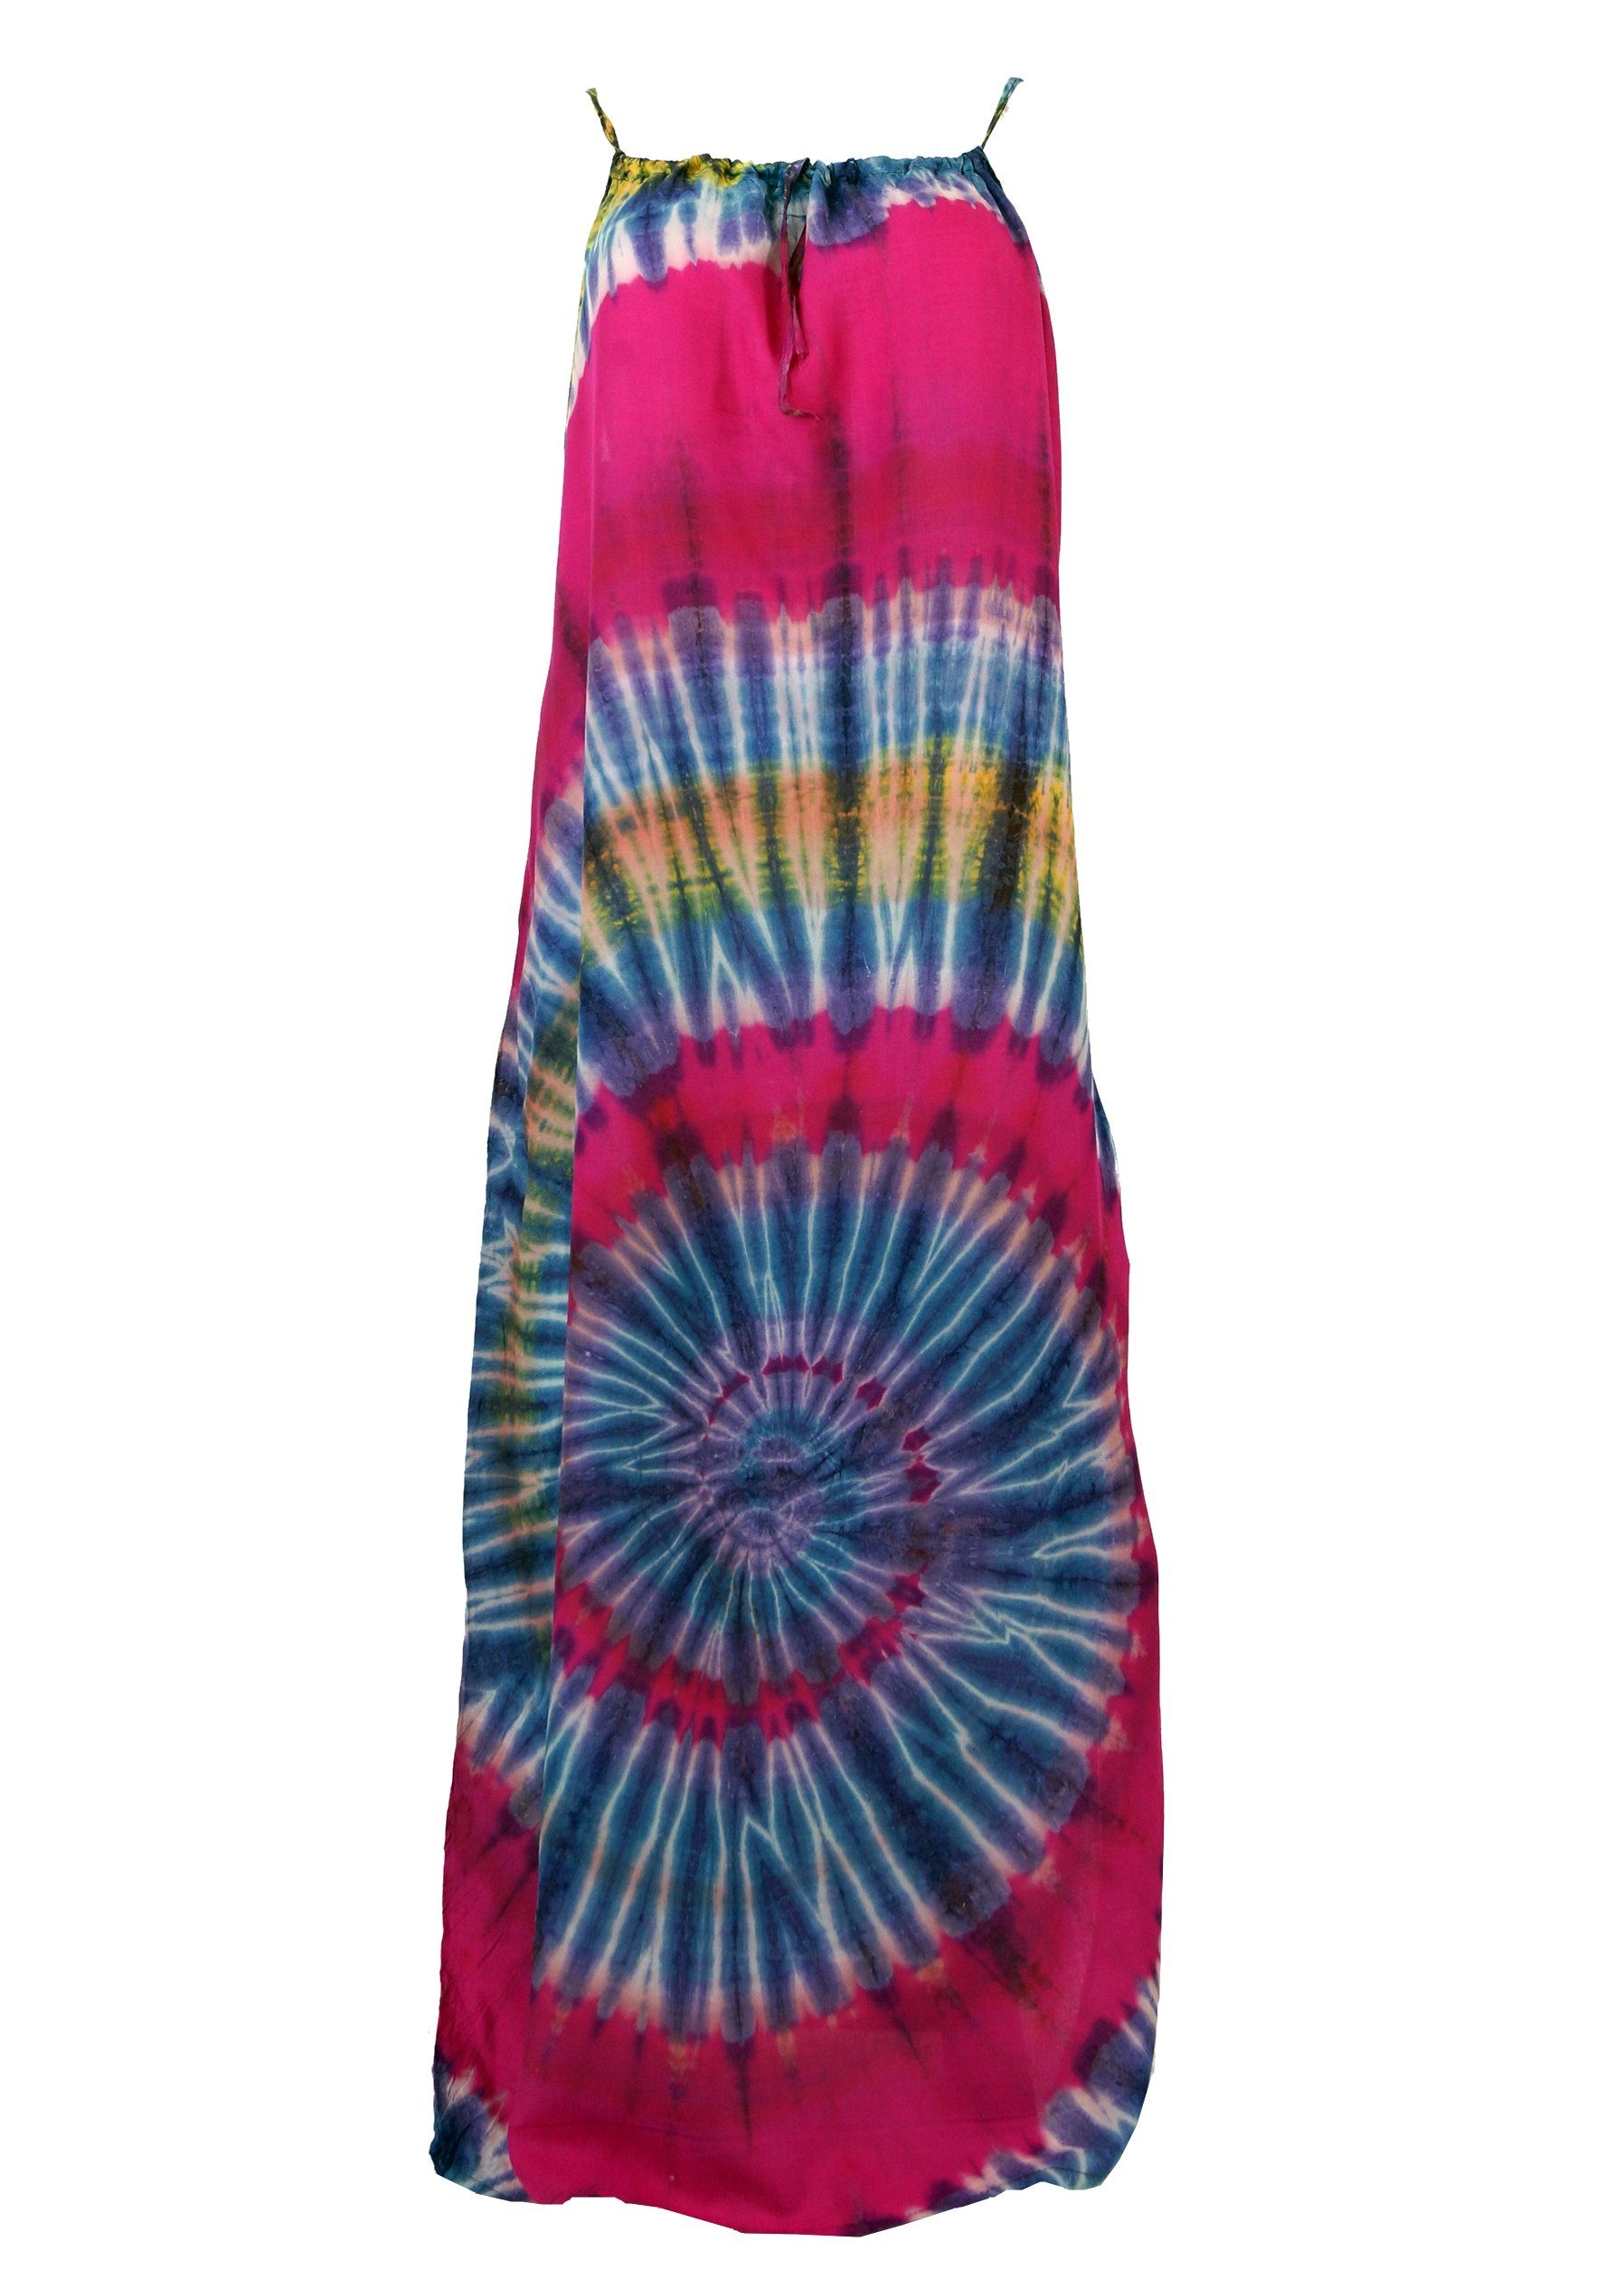 Verkaufspersonal Guru-Shop Midikleid Batik Hippiekleid, Bekleidung Sommerkleid, pink alternative Trägerkleid